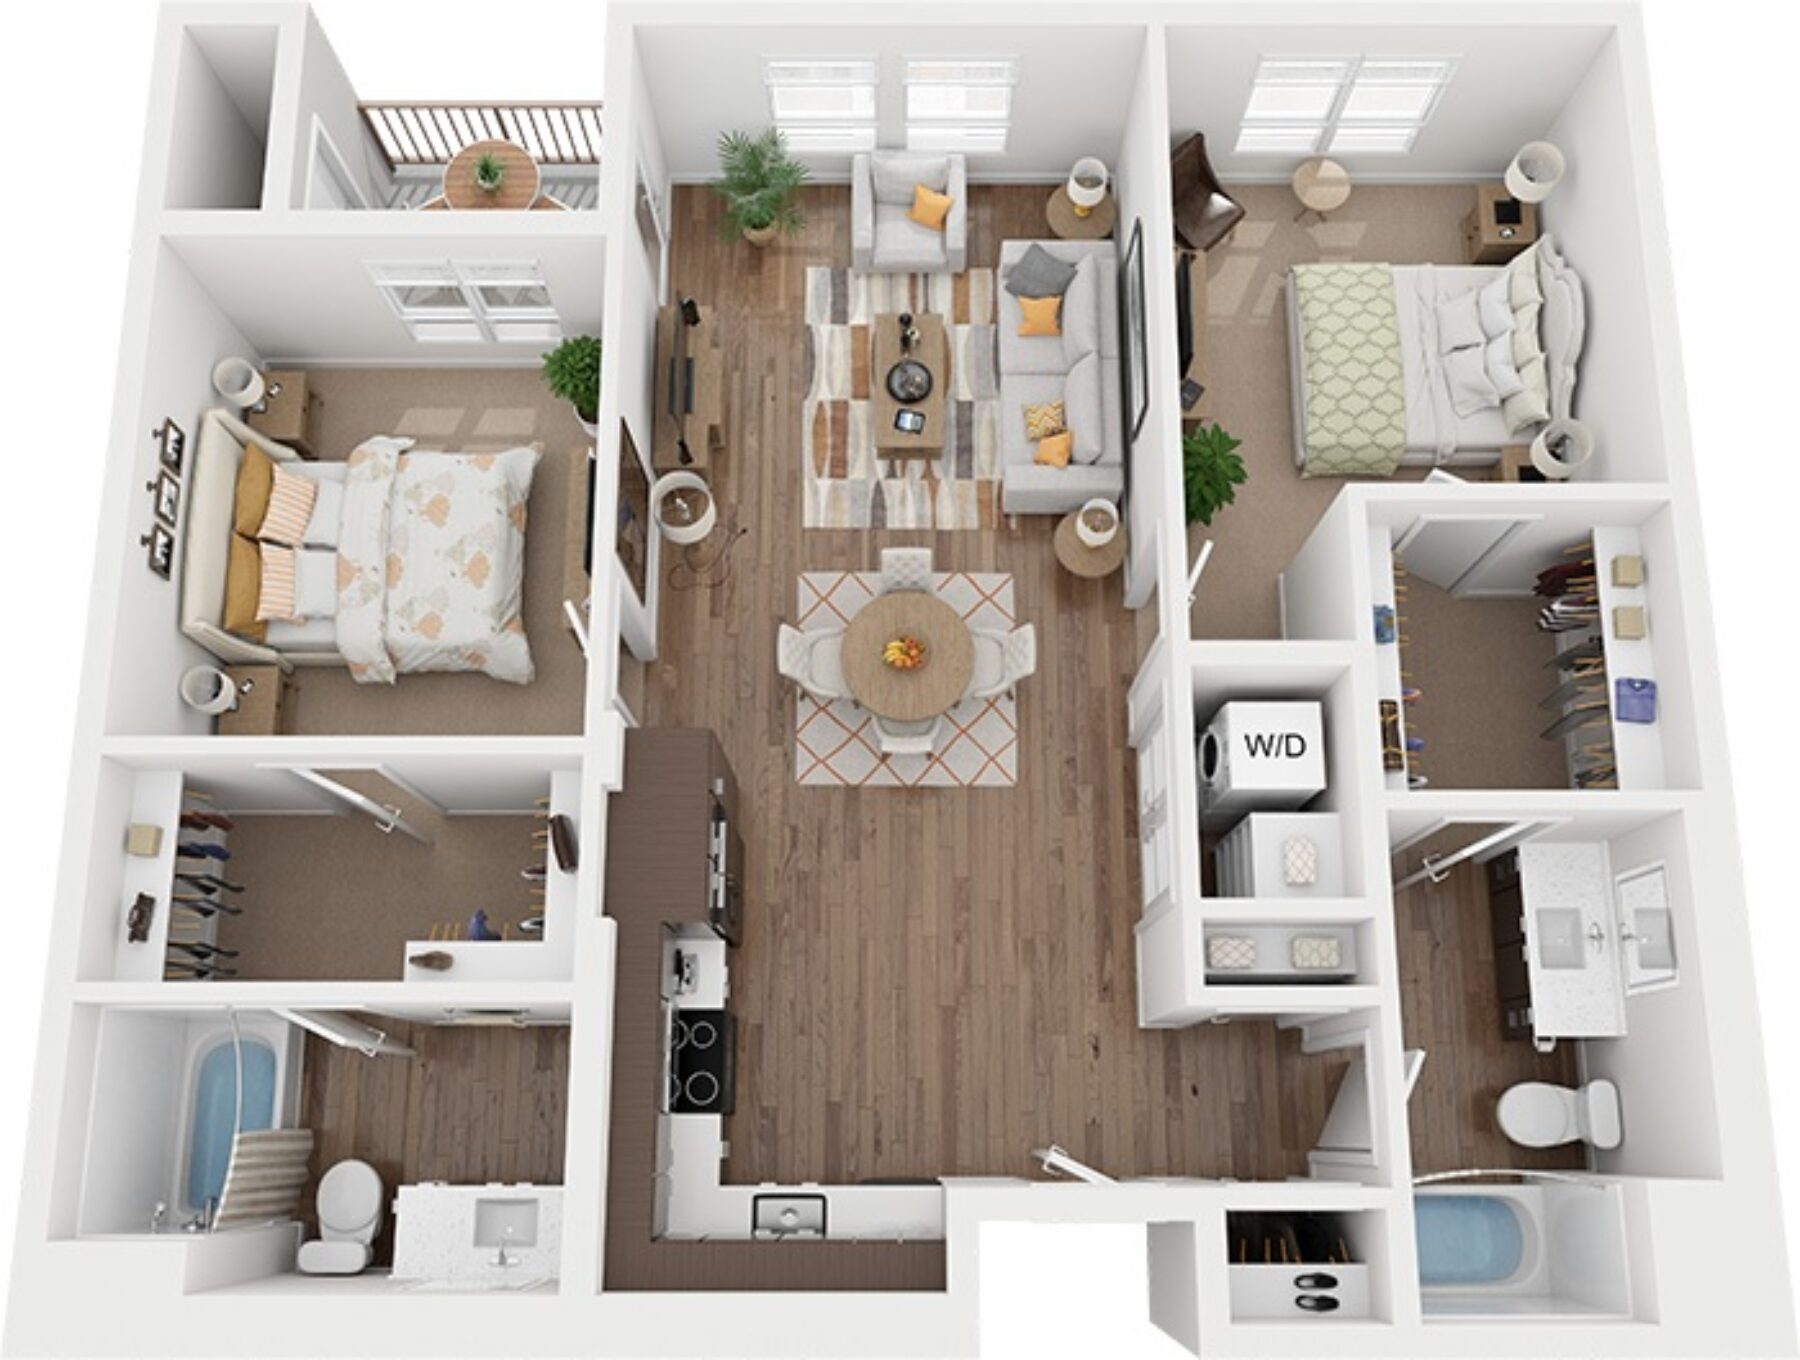 Plan Image: B2 - Two Bedroom